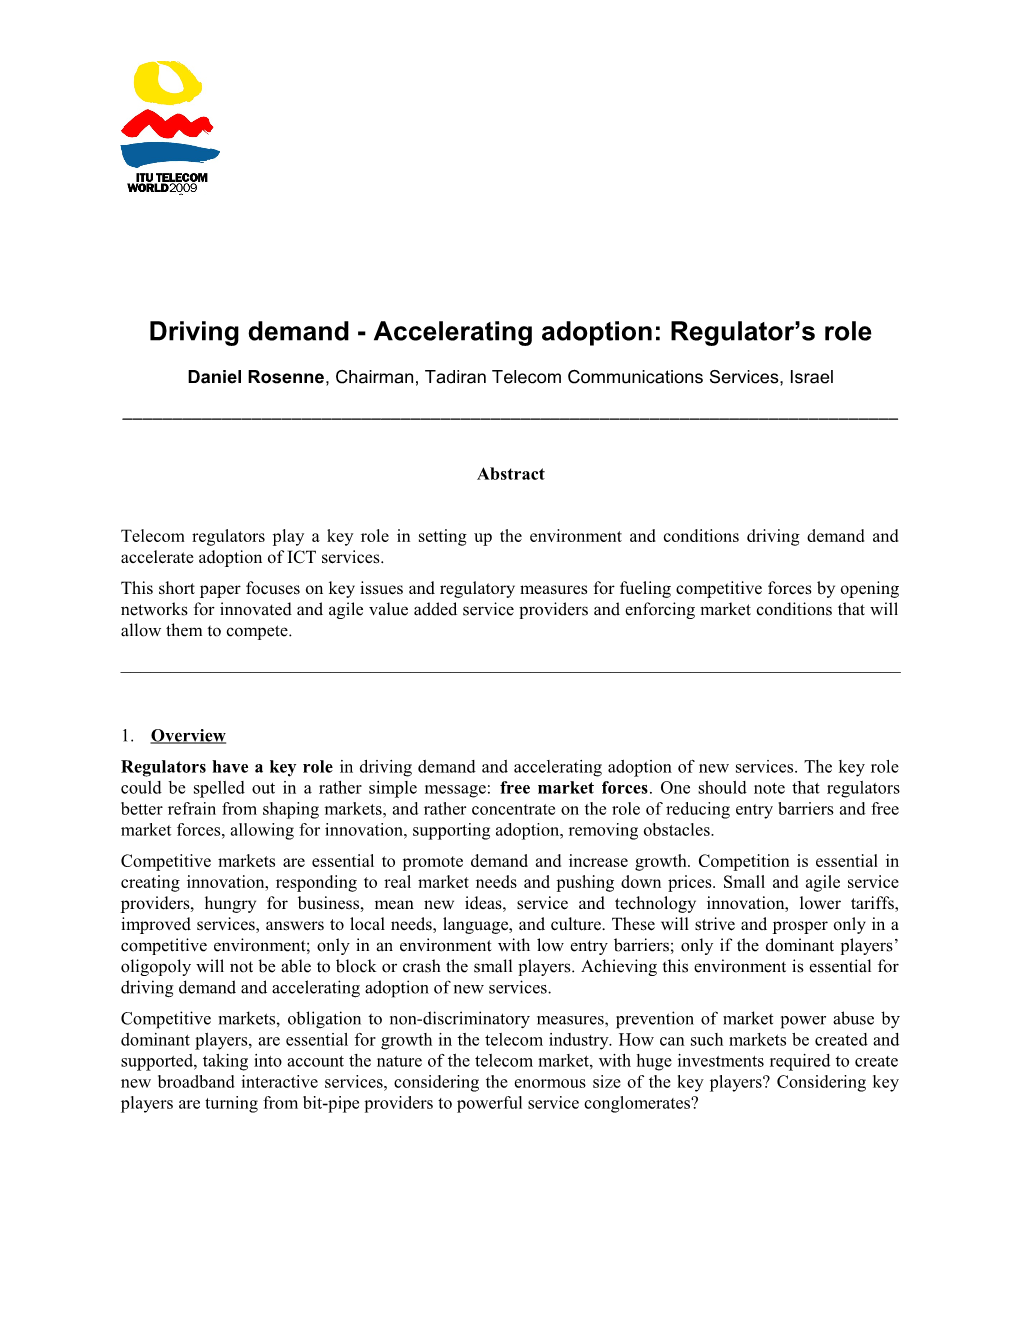 Driving Demand - Accelerating Adoption: Regulator S Role